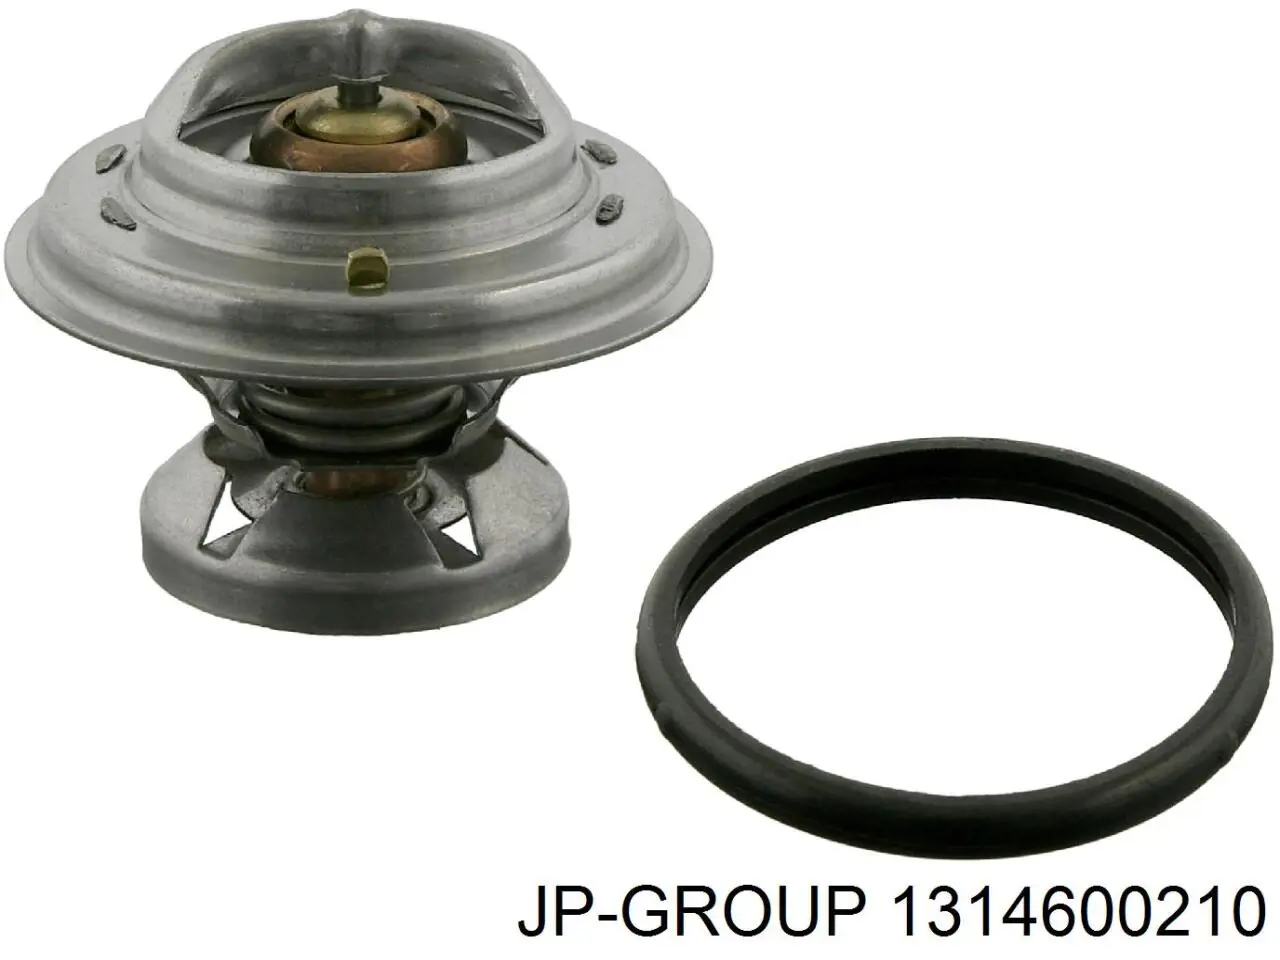 1314600210 JP Group termostato